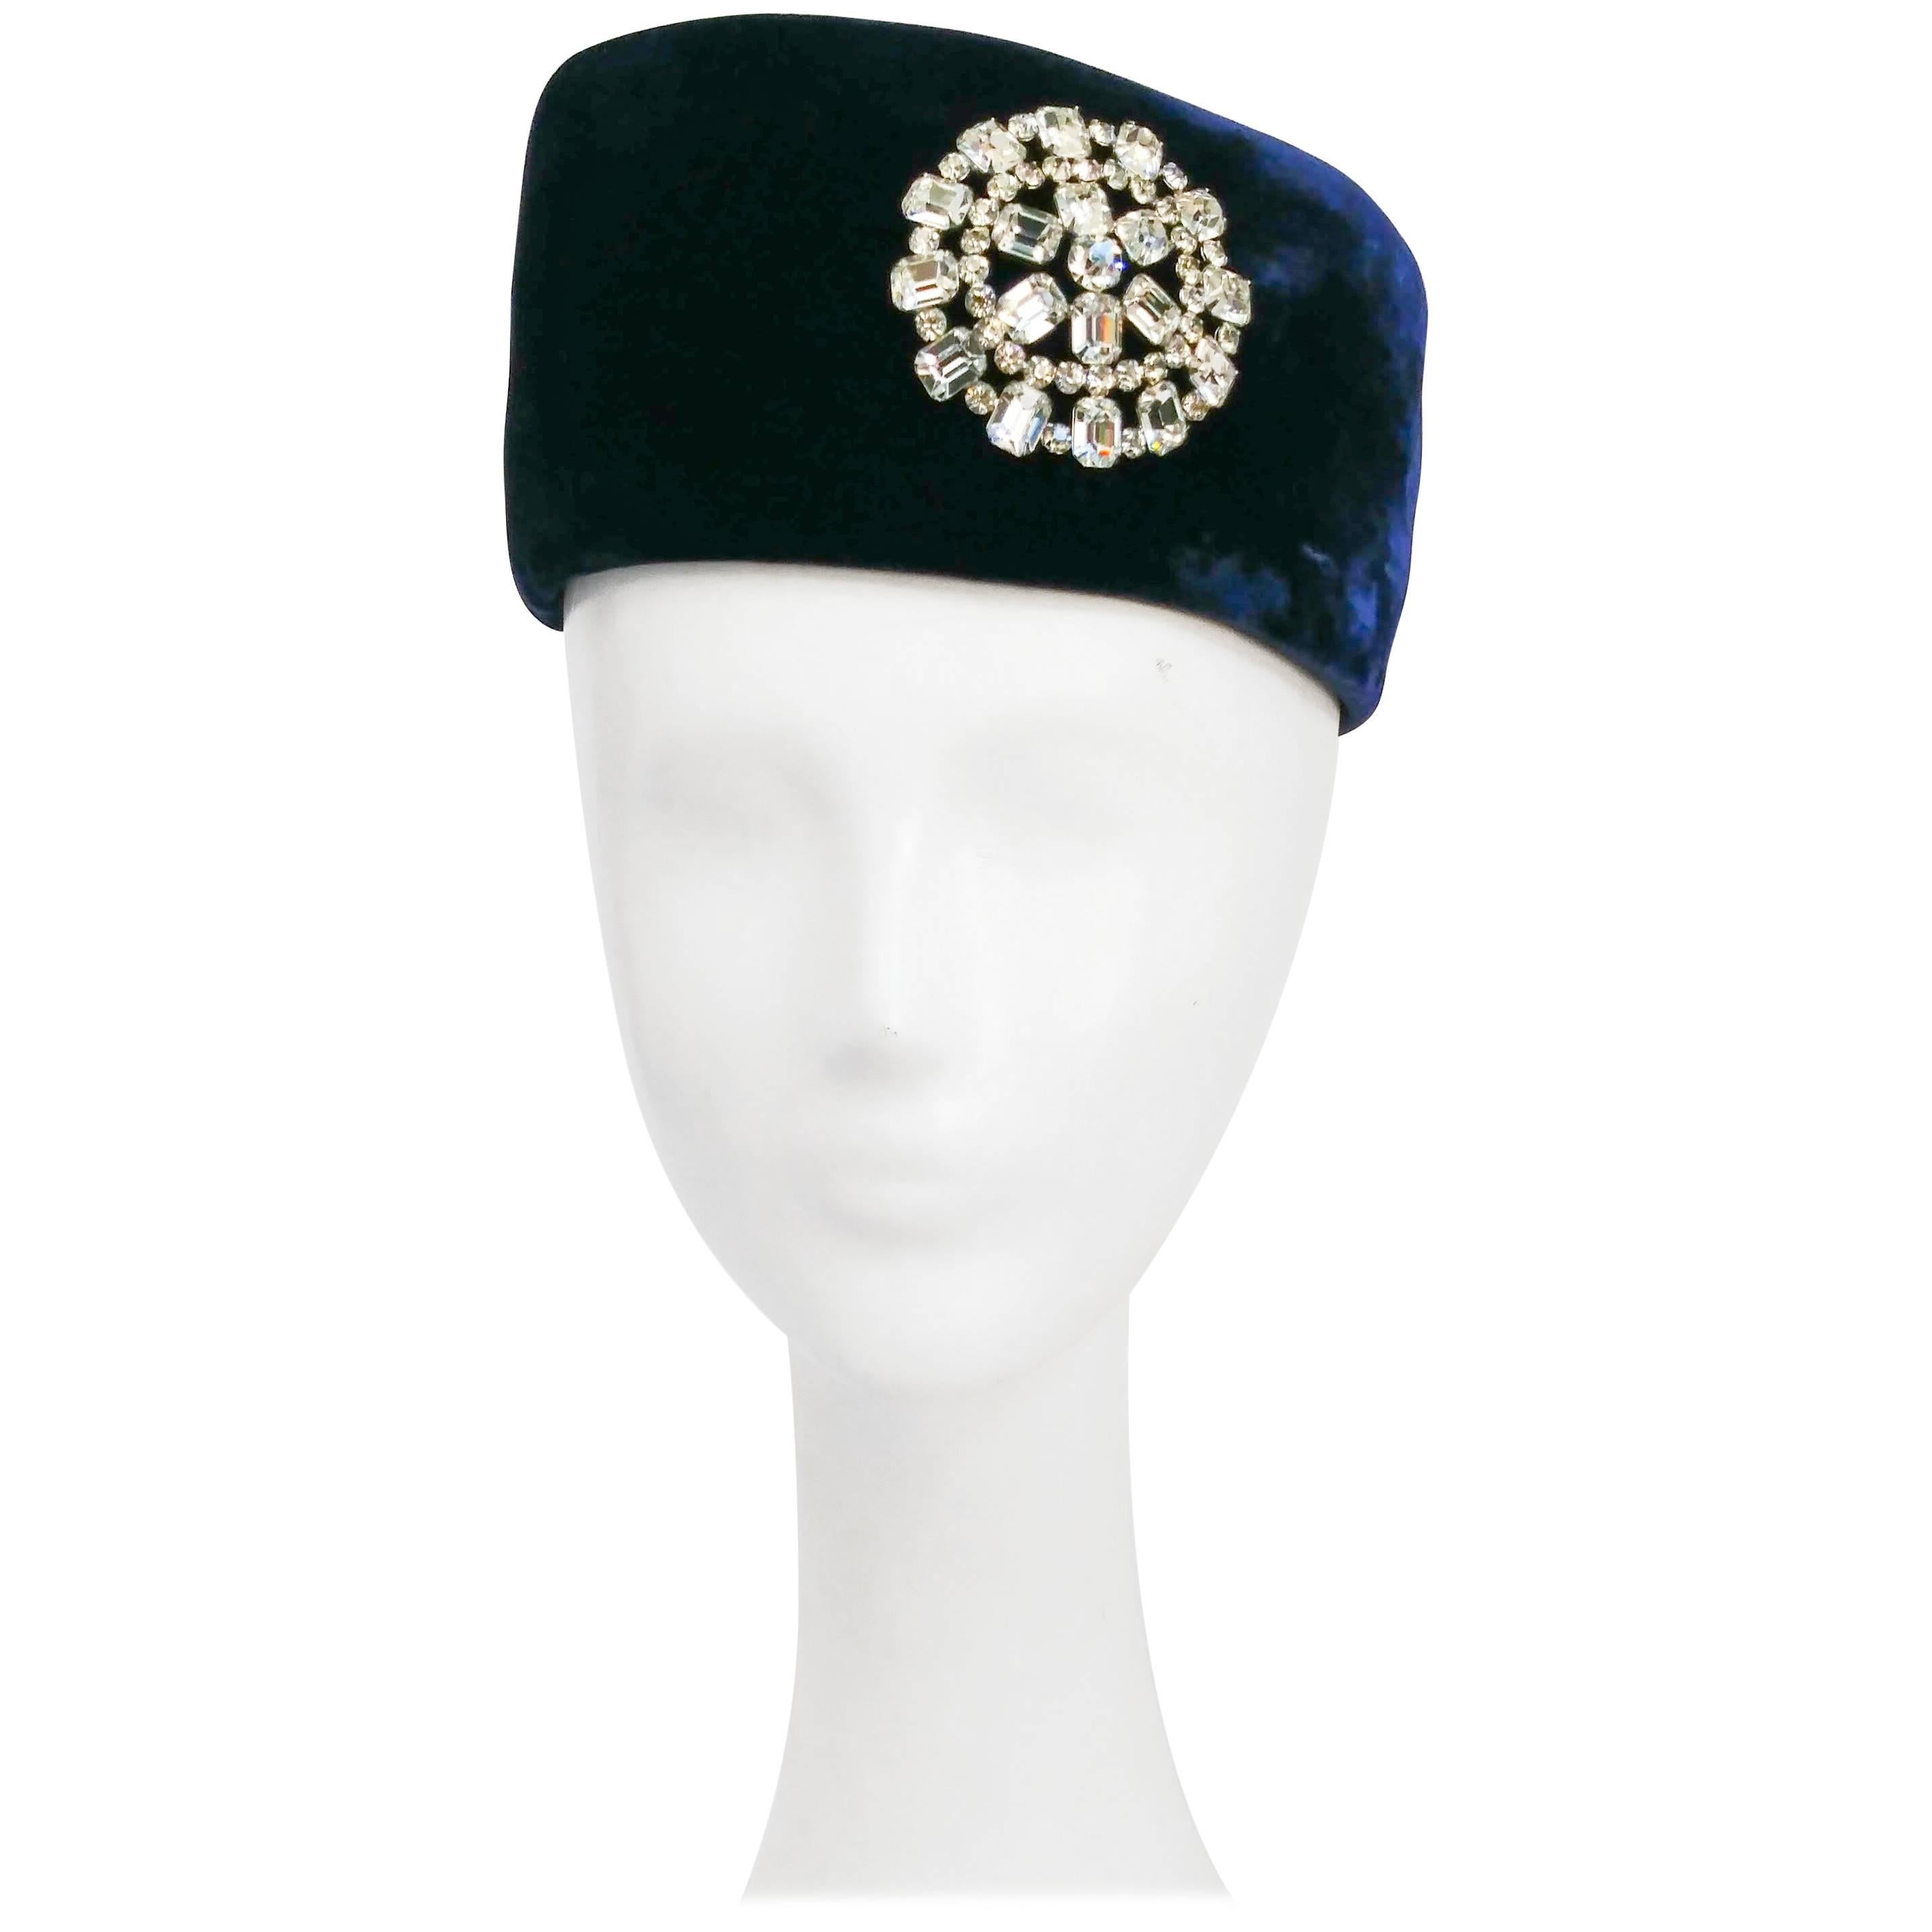 1960s Blue Velvet Hat with Rhinestone Embellishment